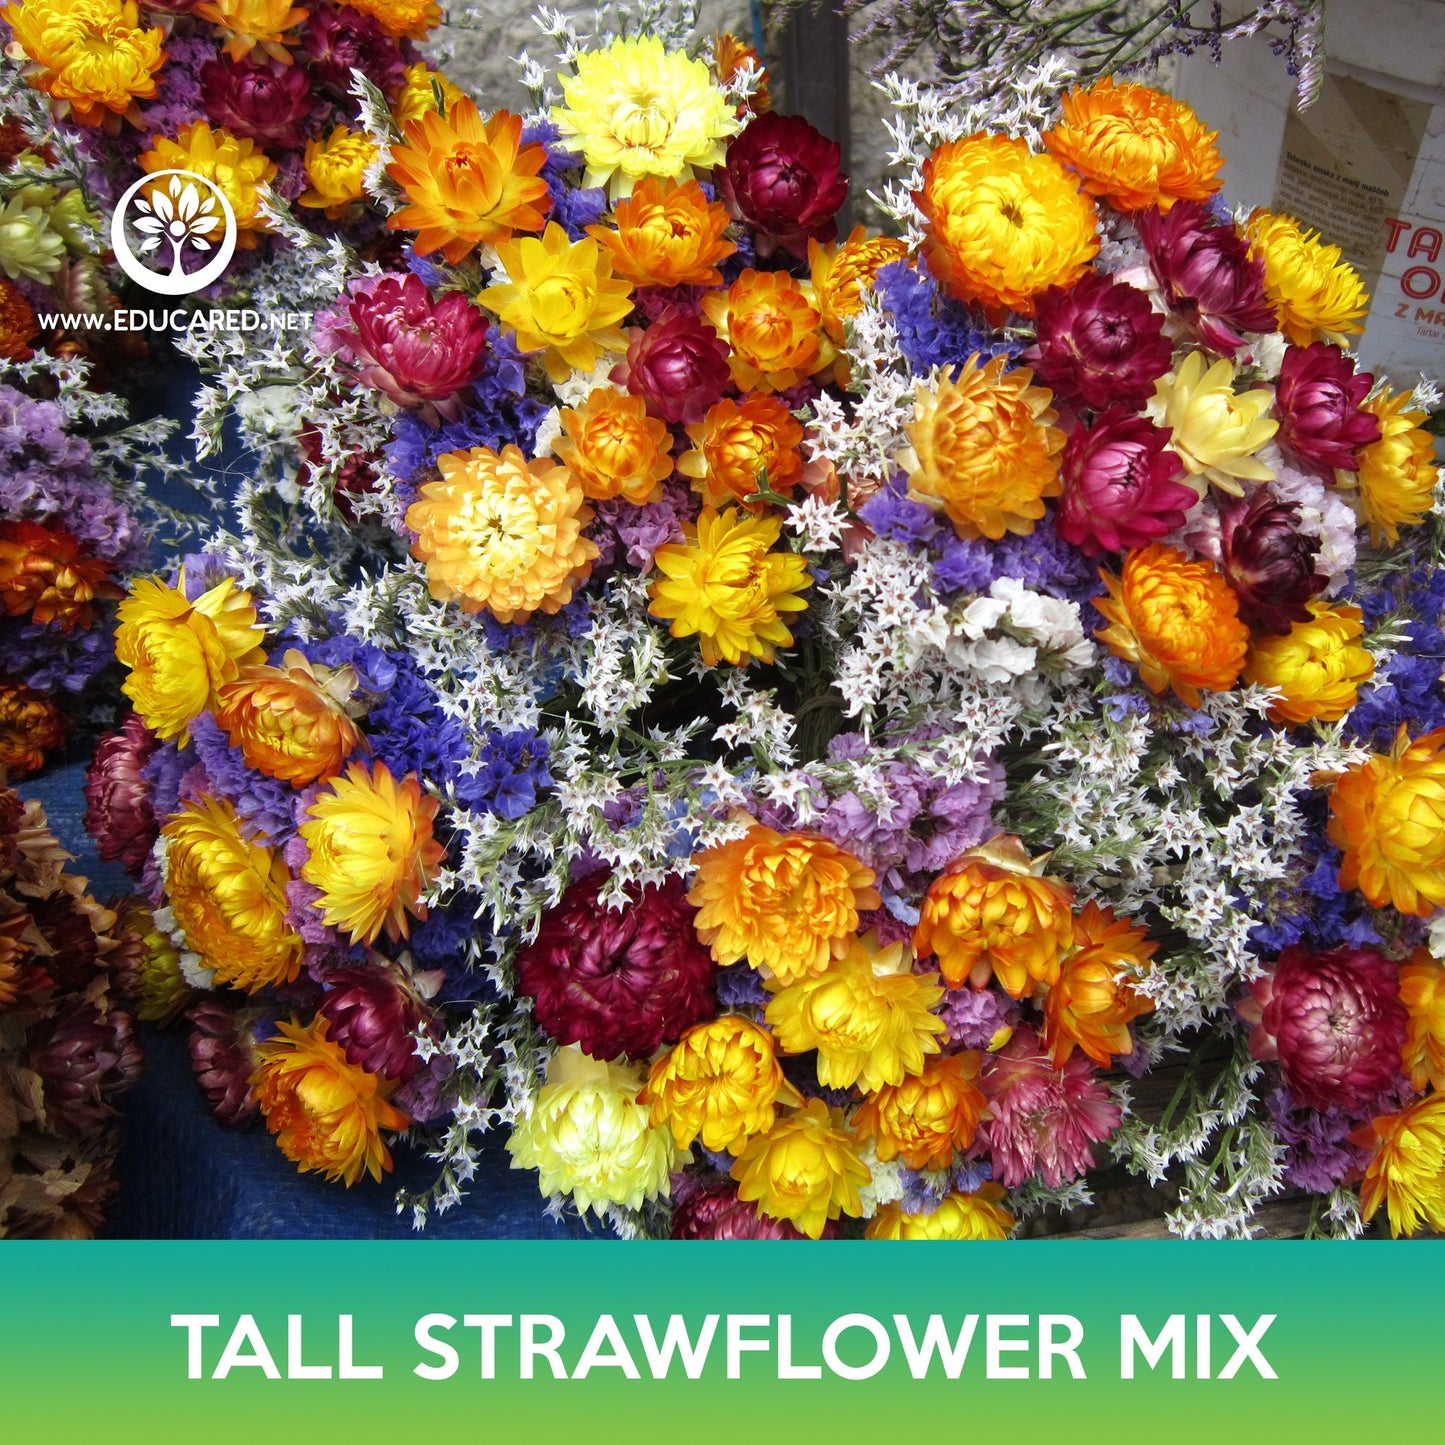 Tall Strawflower Mix Seeds, Helichrysum bracteatum